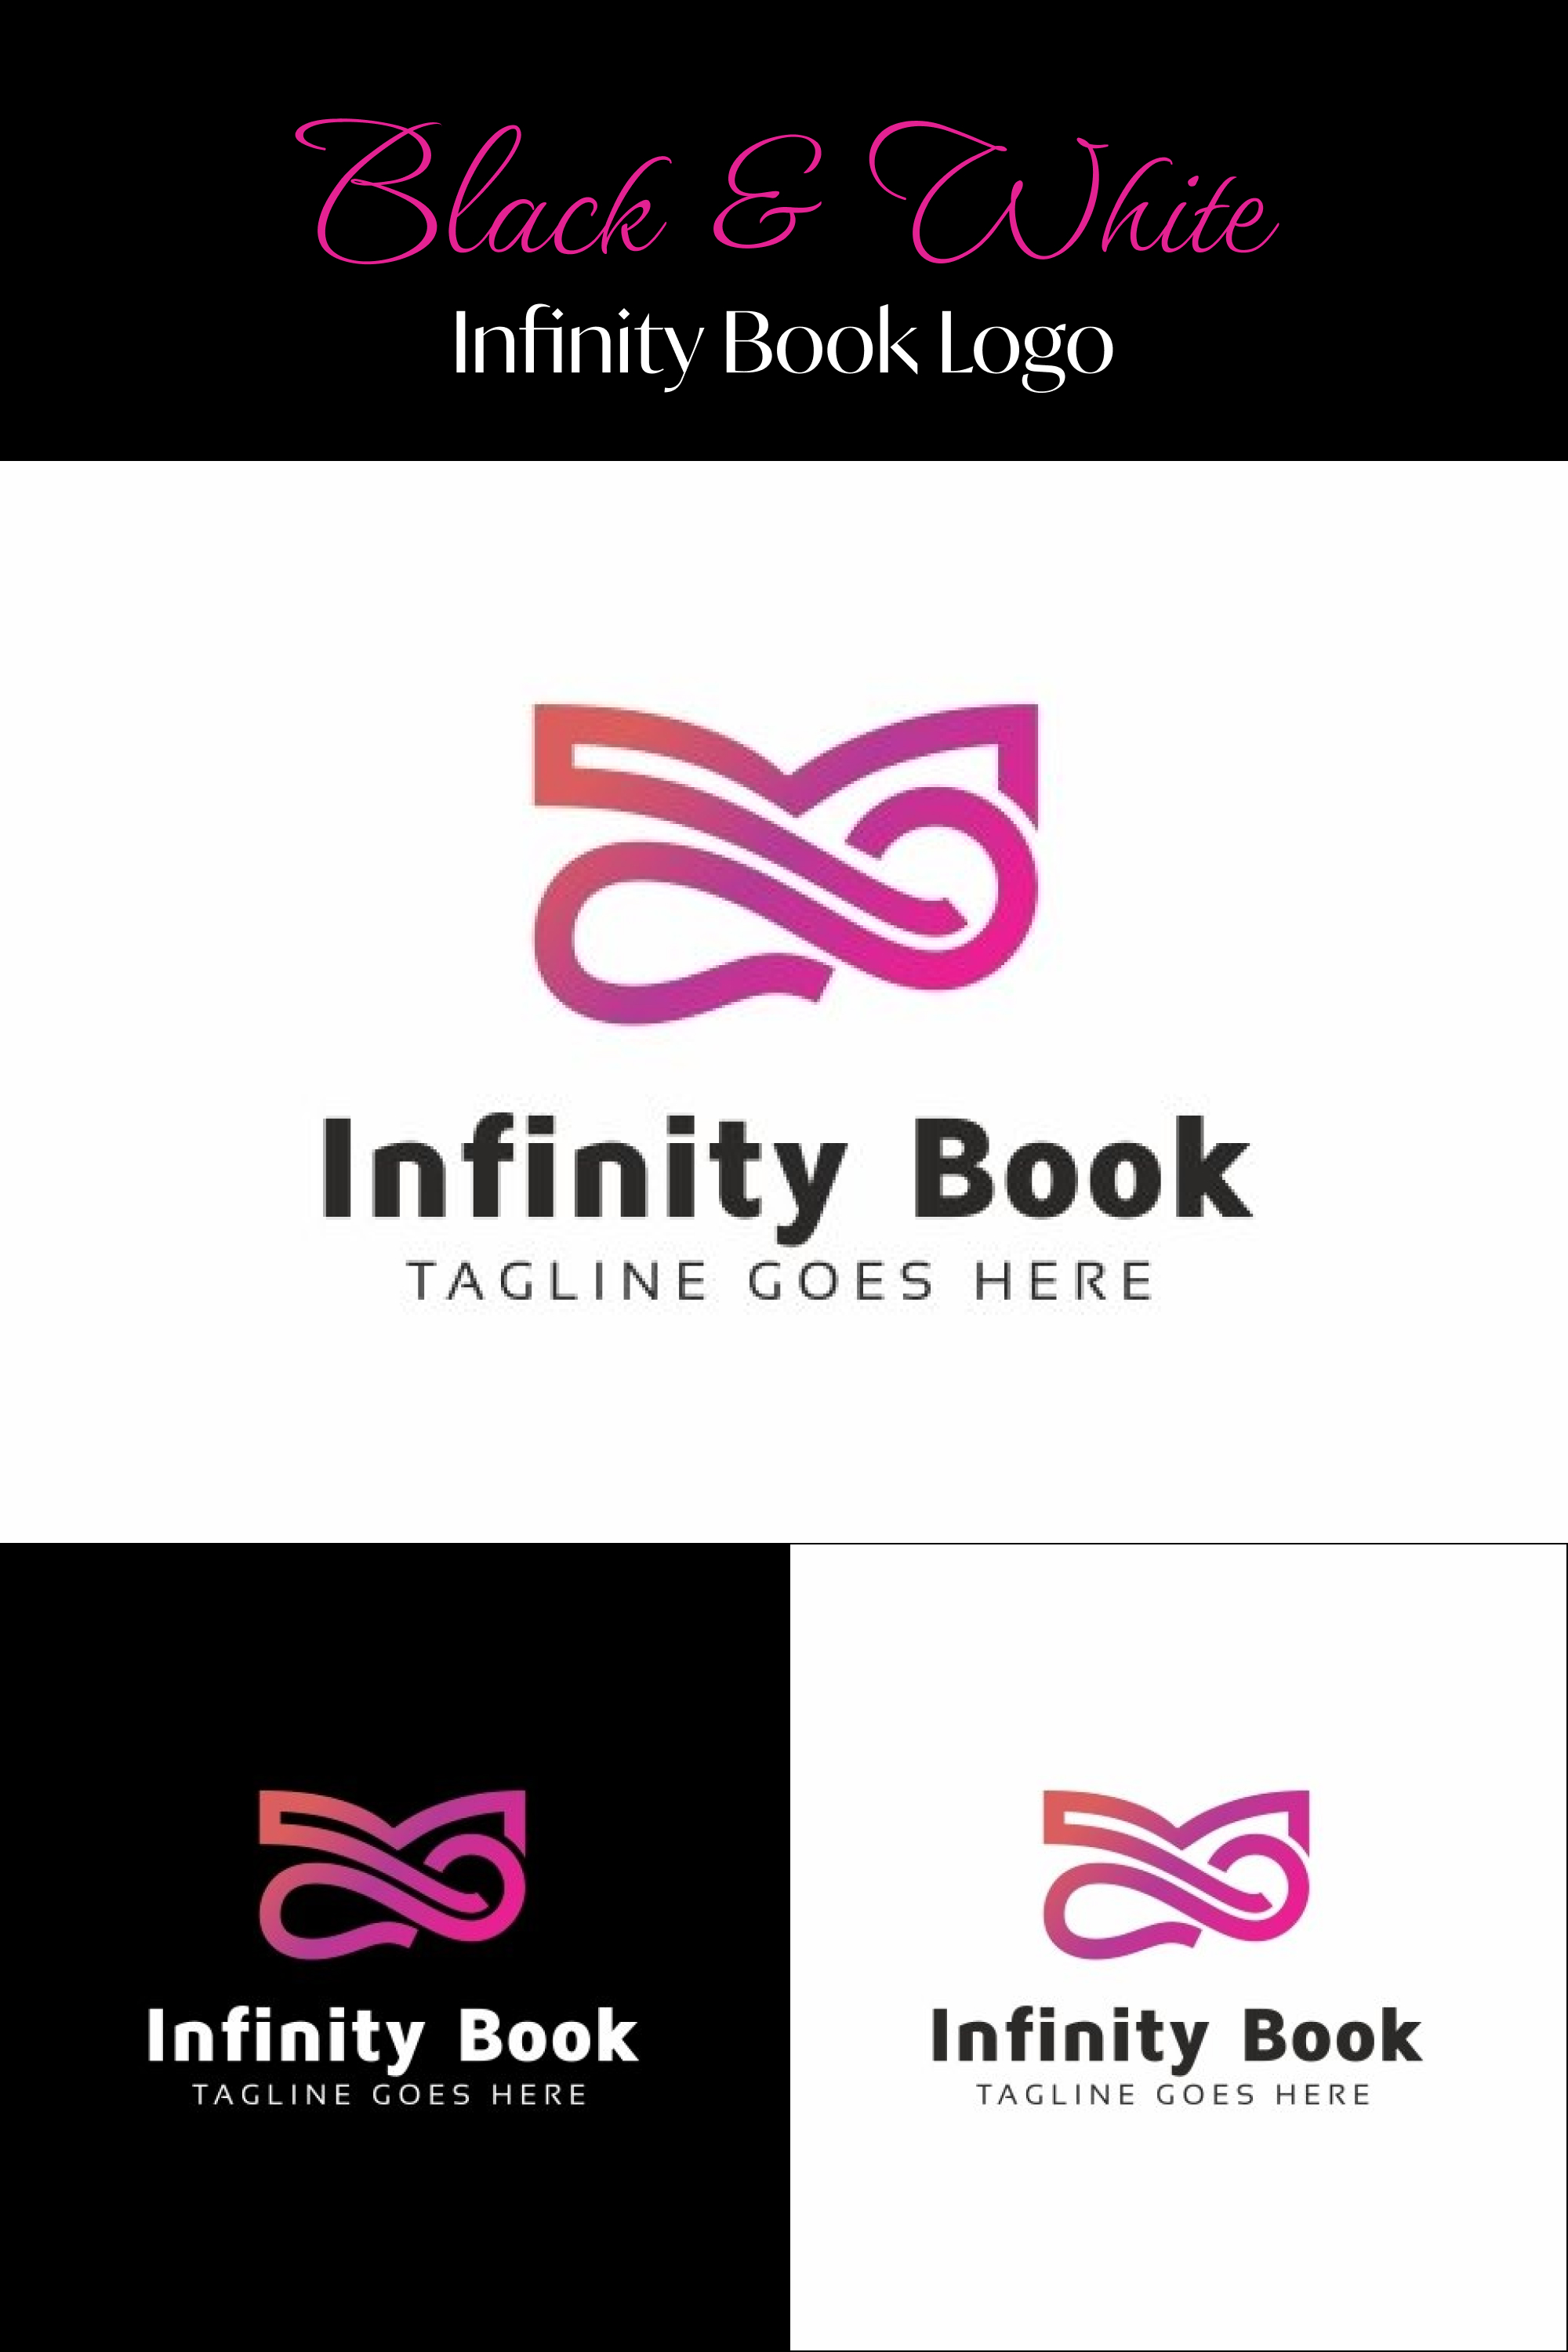 Infinity book logo of pinterest.